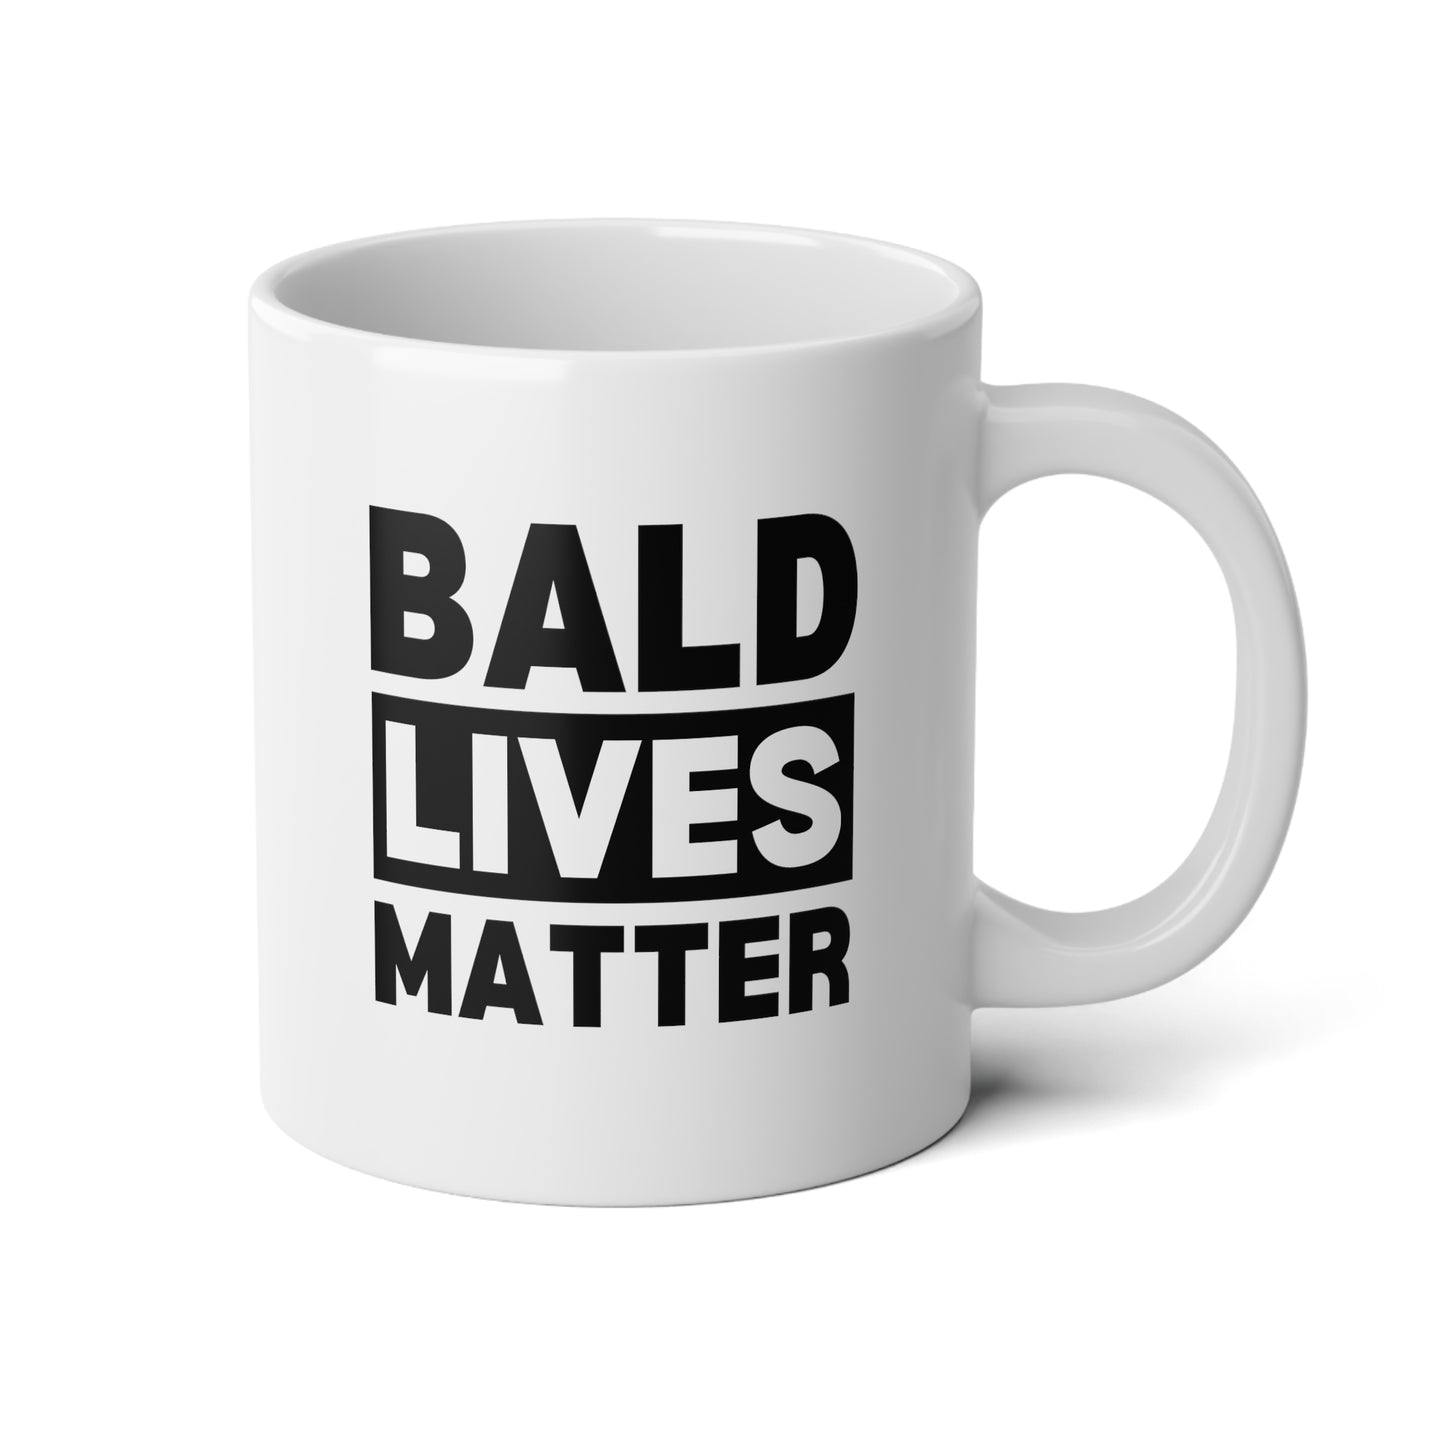 Bald Lives Matter 20oz white funny large coffee mug gift for middle aged men him baldi baldy birthday anniversary waveywares wavey wares wavywares wavy wares